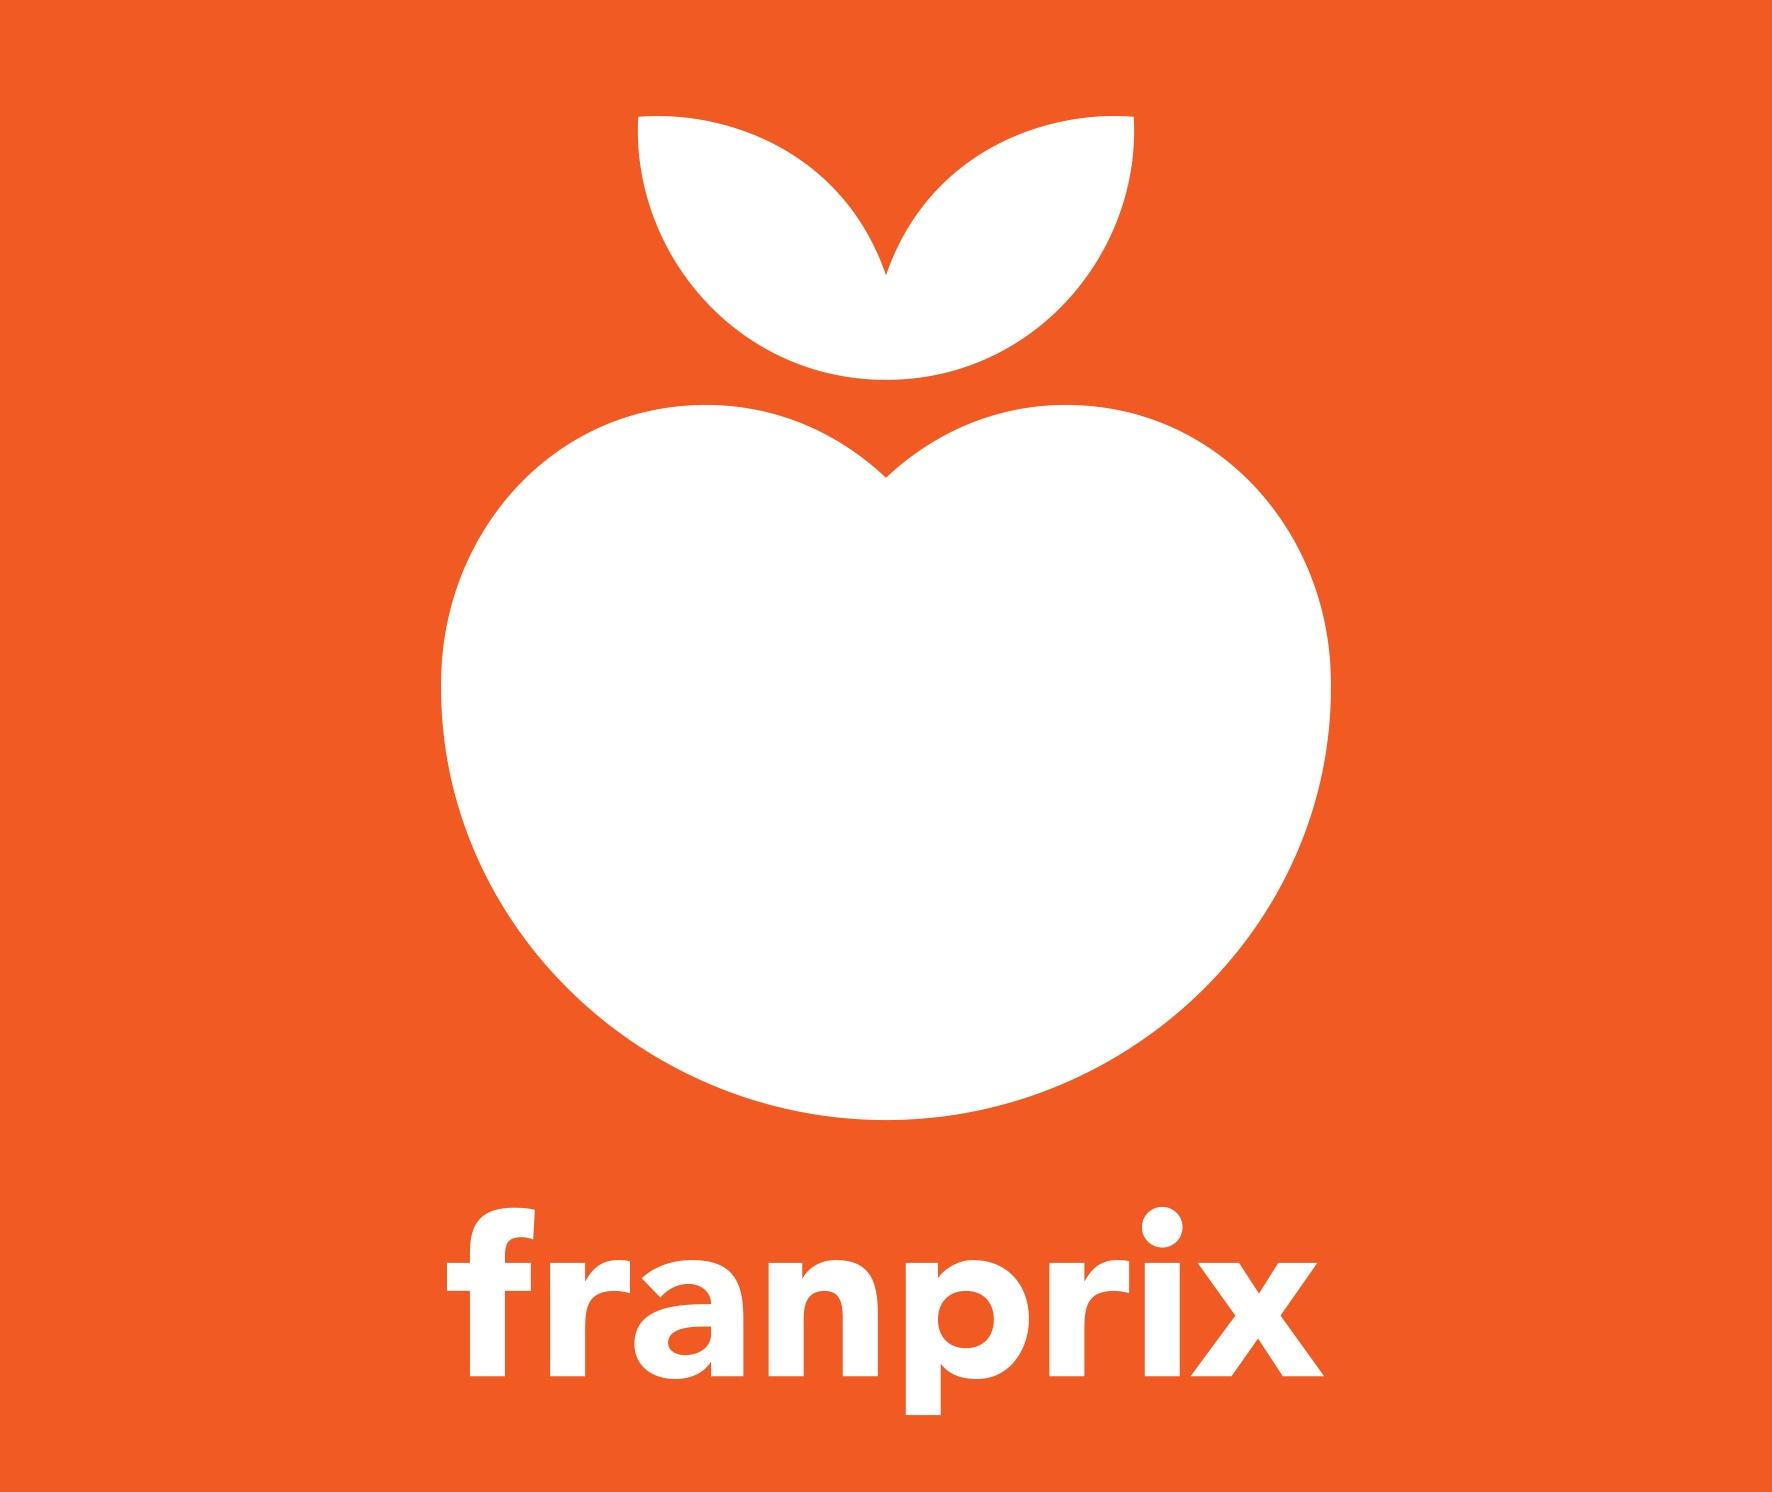 Franprix Orsay